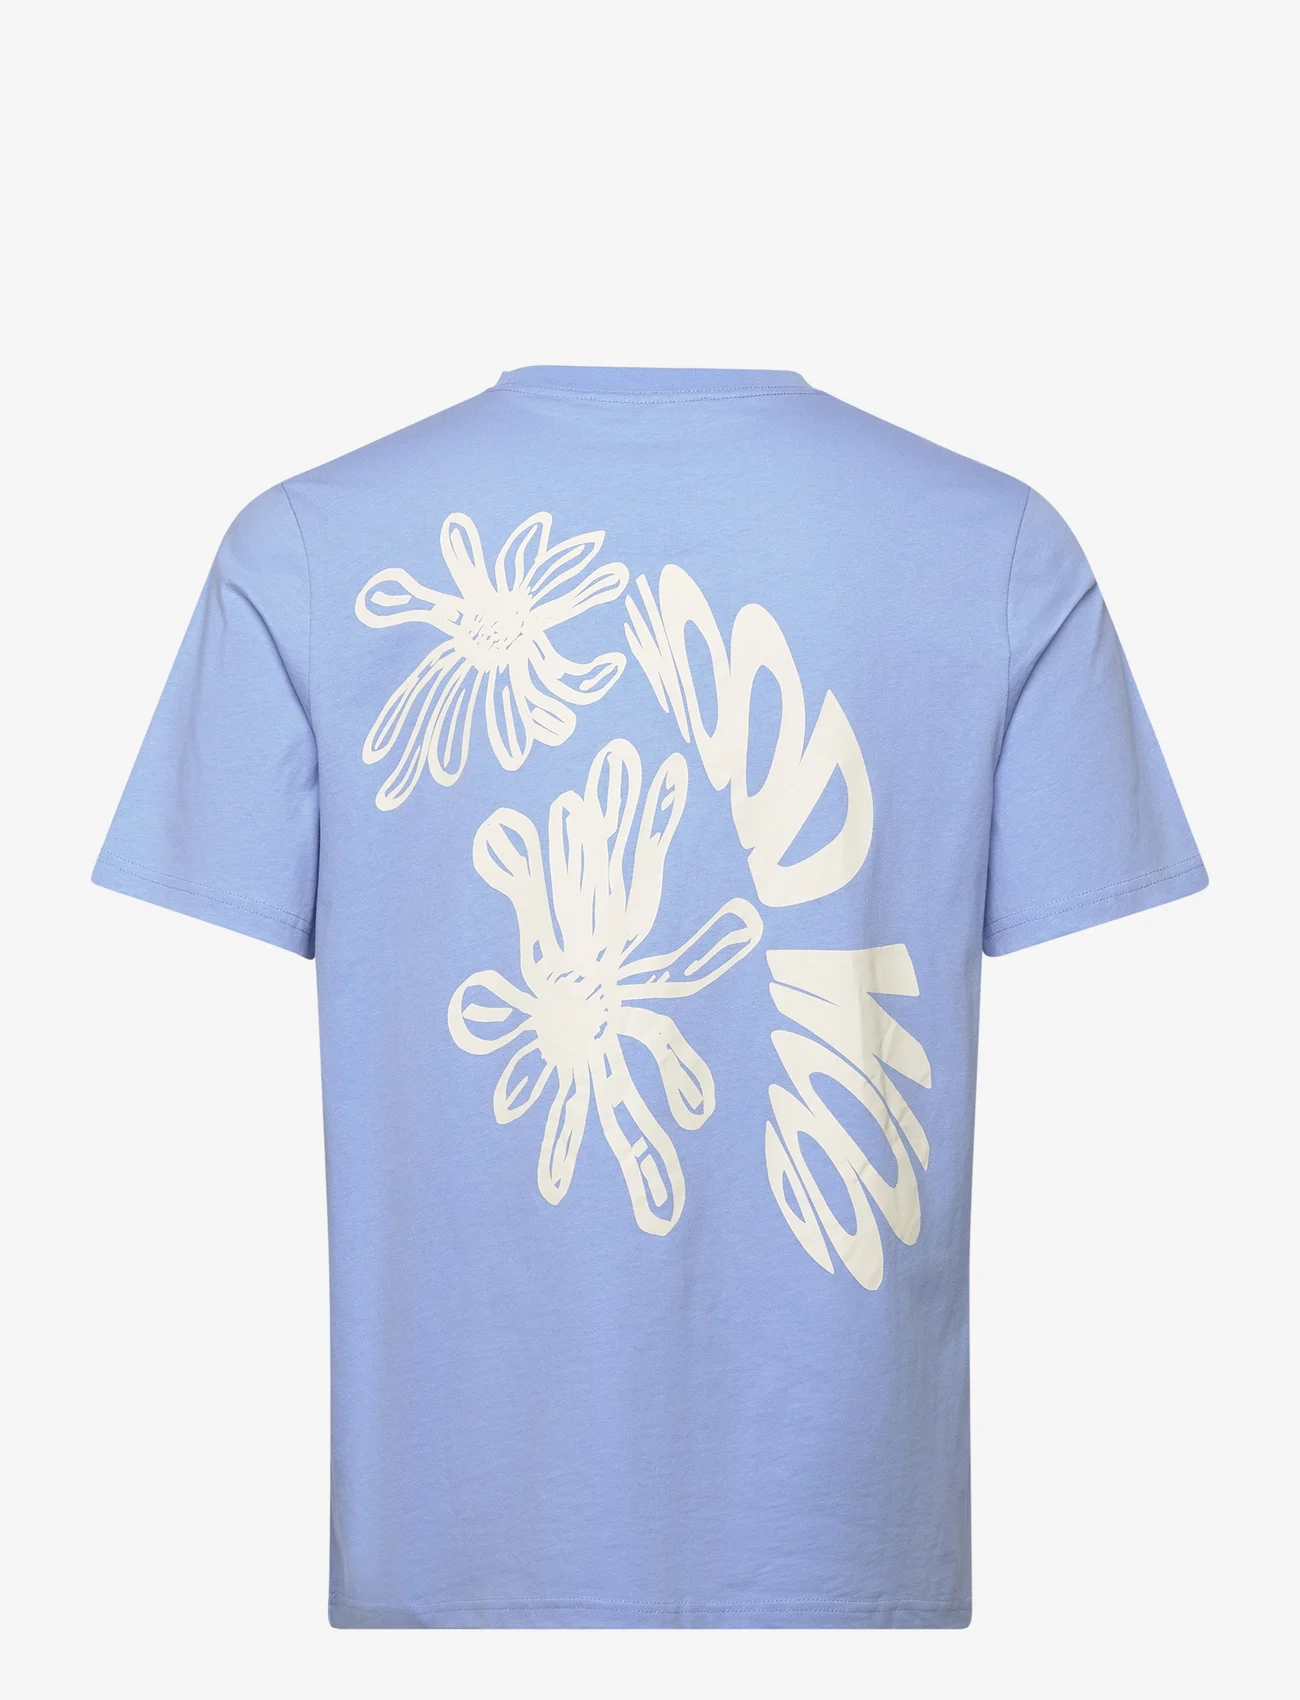 Wood Wood - Bobby Flowers T-shirt GOTS - lühikeste varrukatega t-särgid - cloudy - 1